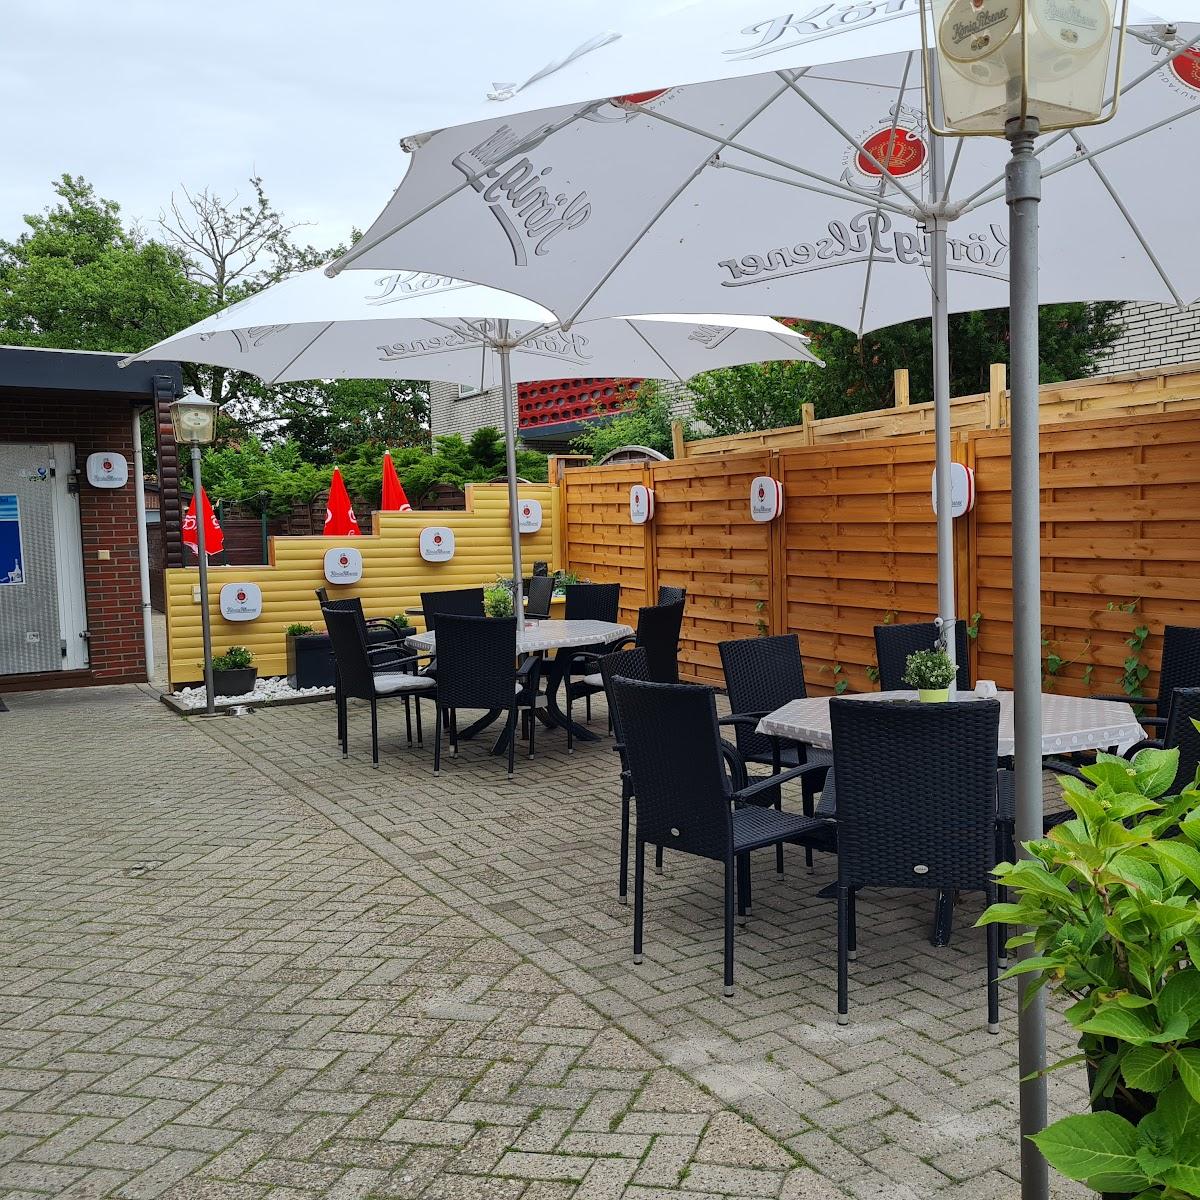 Restaurant "Hotel-Pension Nordseeklause" in Butjadingen